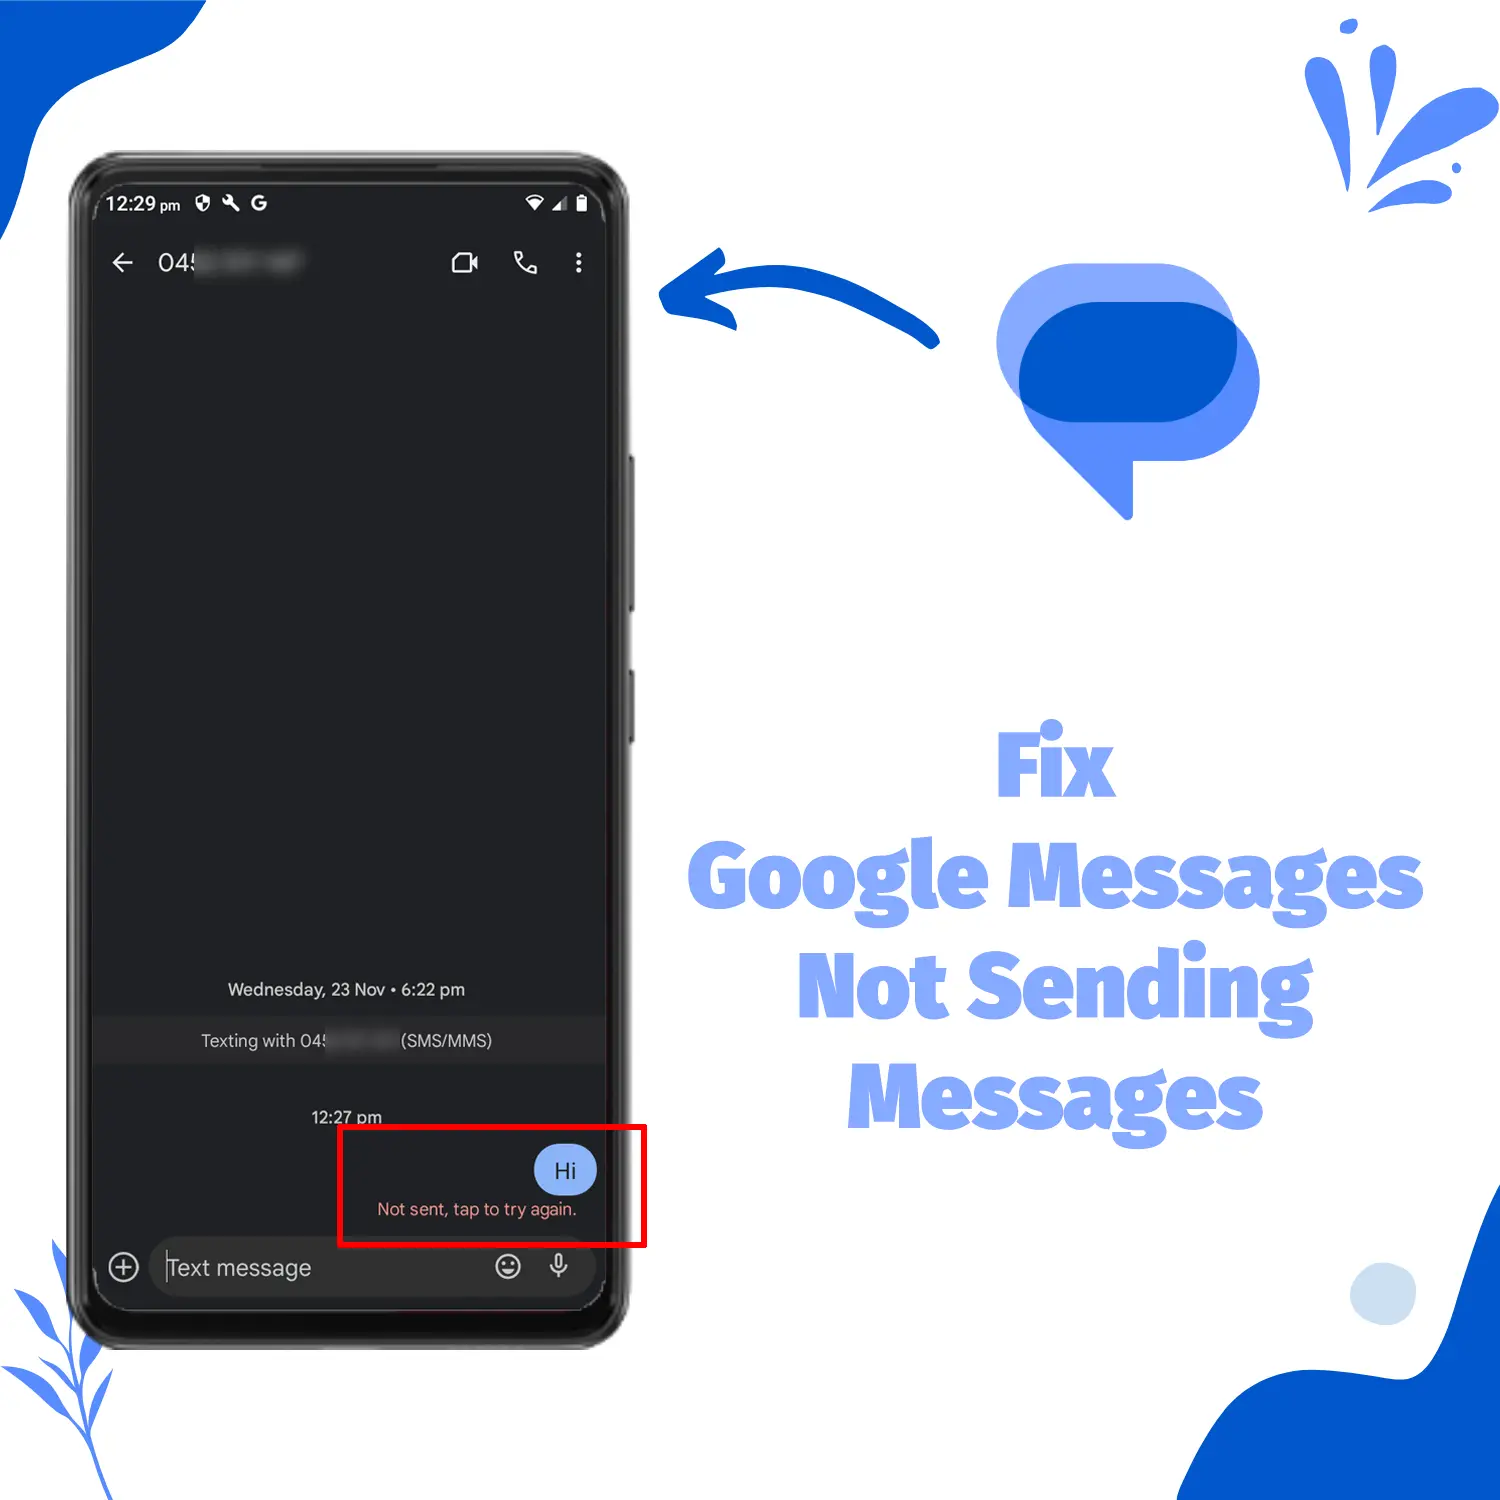 8 Ways to Fix Google Messages Not Sending Messages